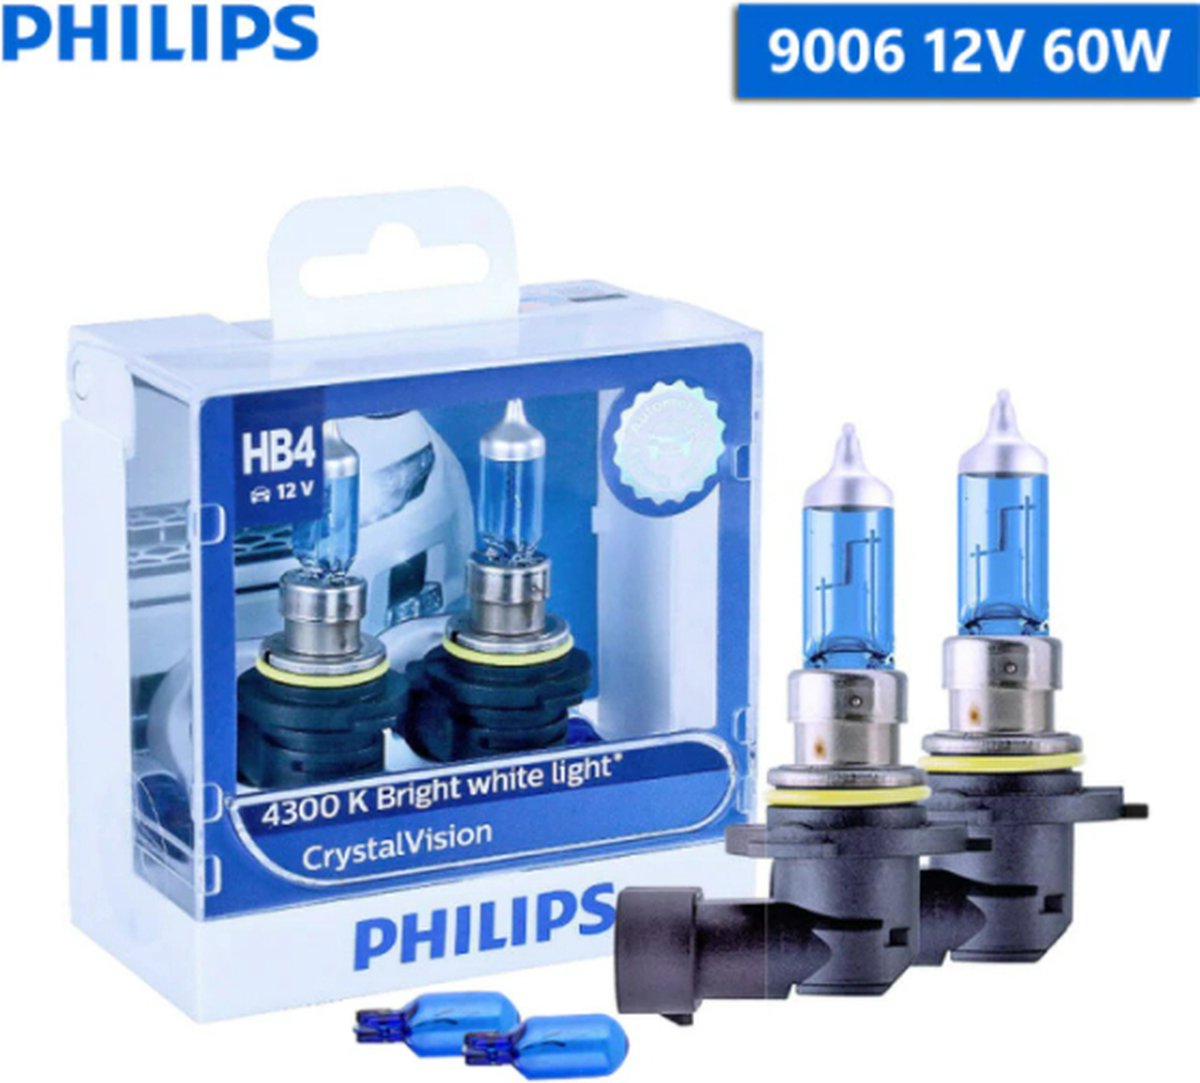 HB4 9006 55 Watt Philips Crystal Vision lampen 12V – Wit licht 4300K – Xenon look – LED look – Hoge lichtopbrengst – Lange levensduur – HB4 9006 55w Autolampen – Koplampen – Kleur wit – H.O.D. halogeen Origineel Philips lampen – 2 stuks – Gratis W5W